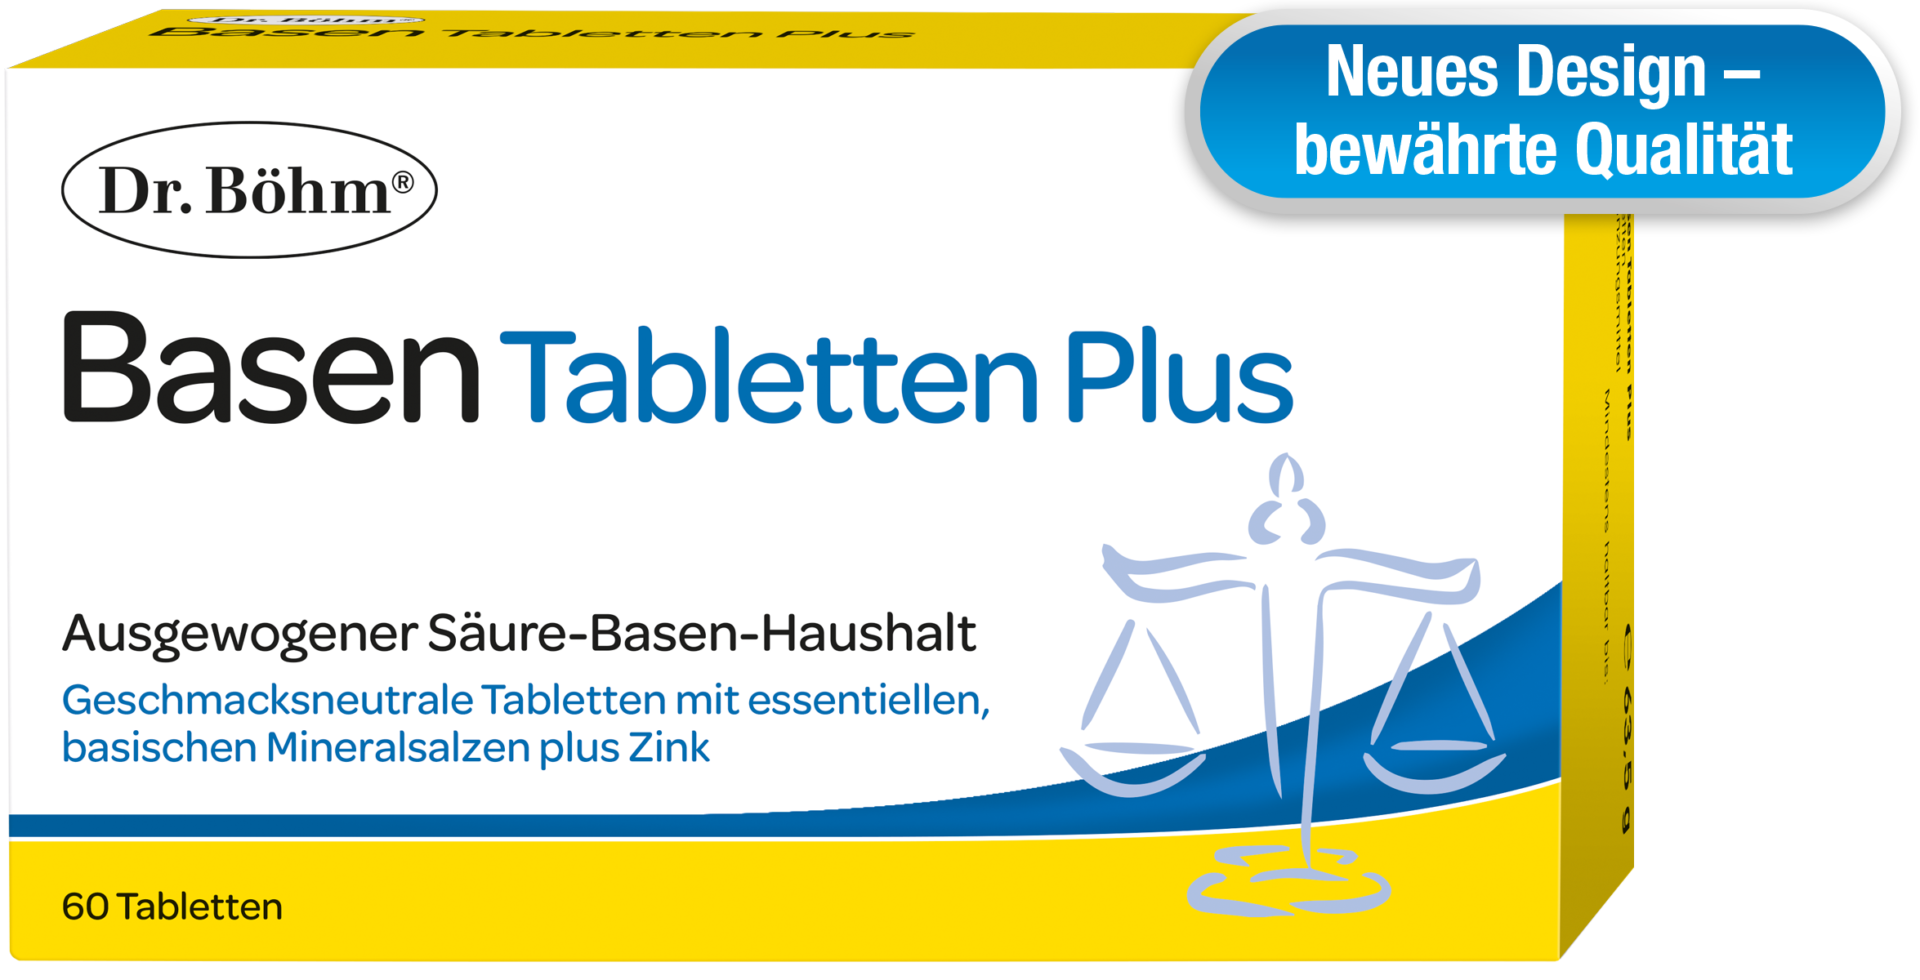 Neues Design - bewährte Qualität - Dr. Böhm® Basen Tabletten Plus